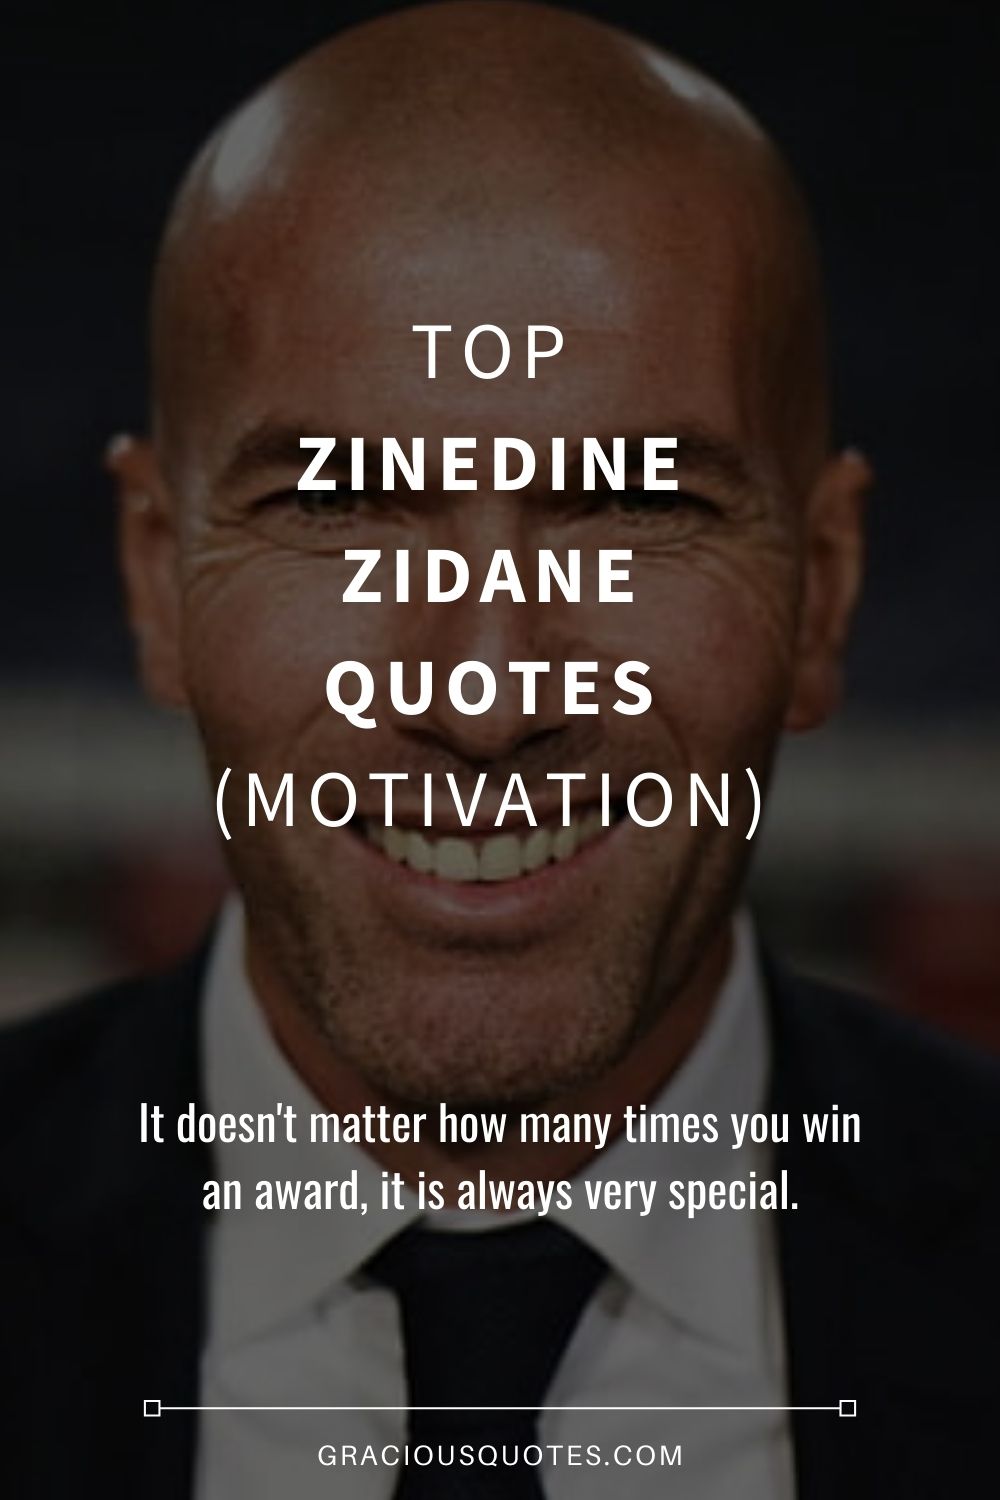 Top Zinedine Zidane Quotes (MOTIVATION) - Gracious Quotes